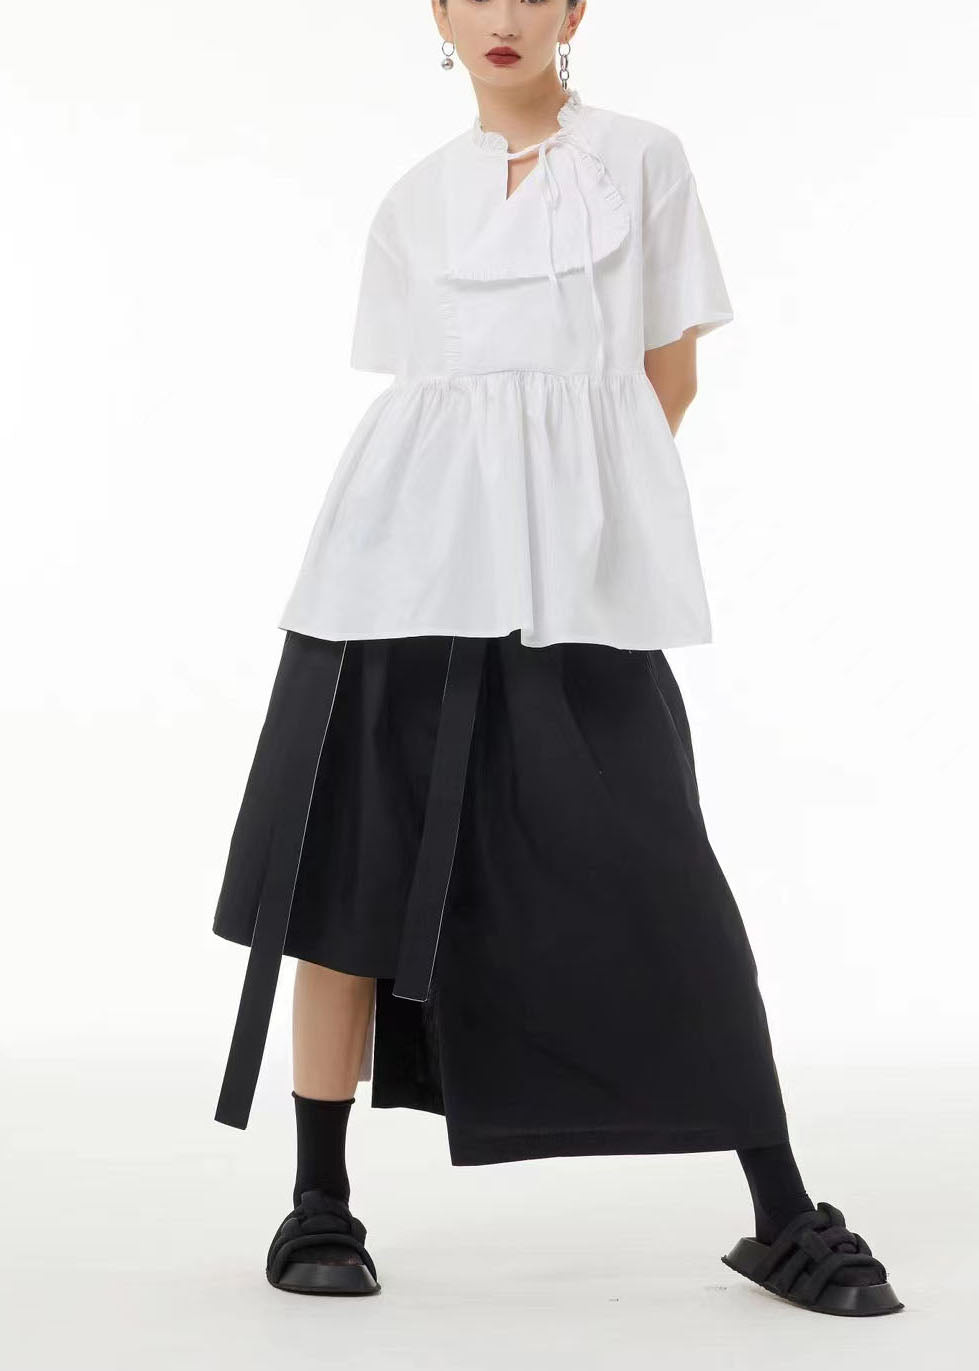 Art Black Asymmetrical Patchwork Wrinkled Cotton Shirt Tops Summer LC0112 - fabuloryshop